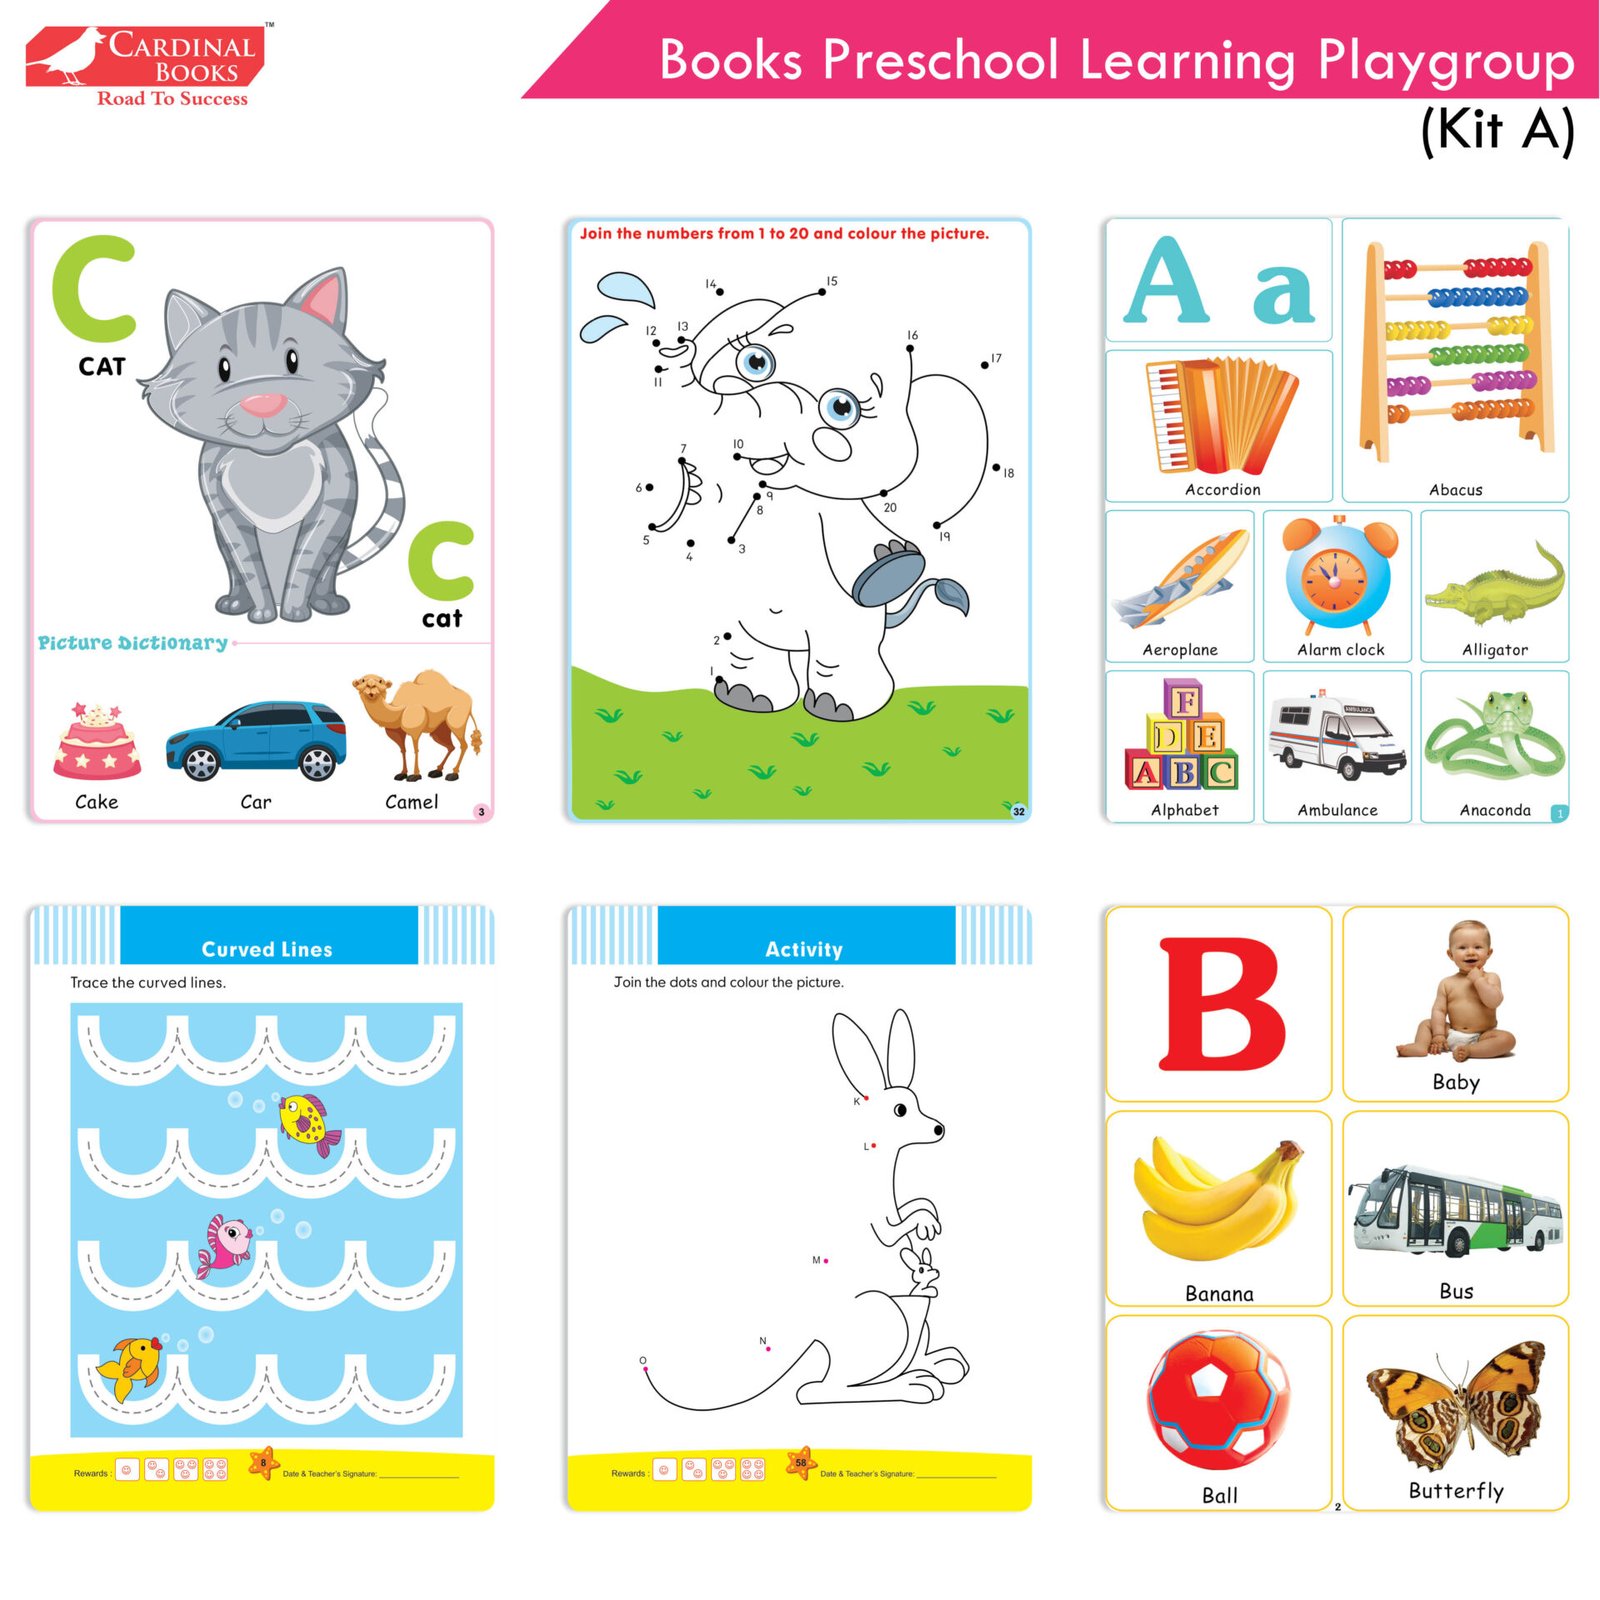 Cardinal Books Preschool Learning Playgroup Kit A (8)